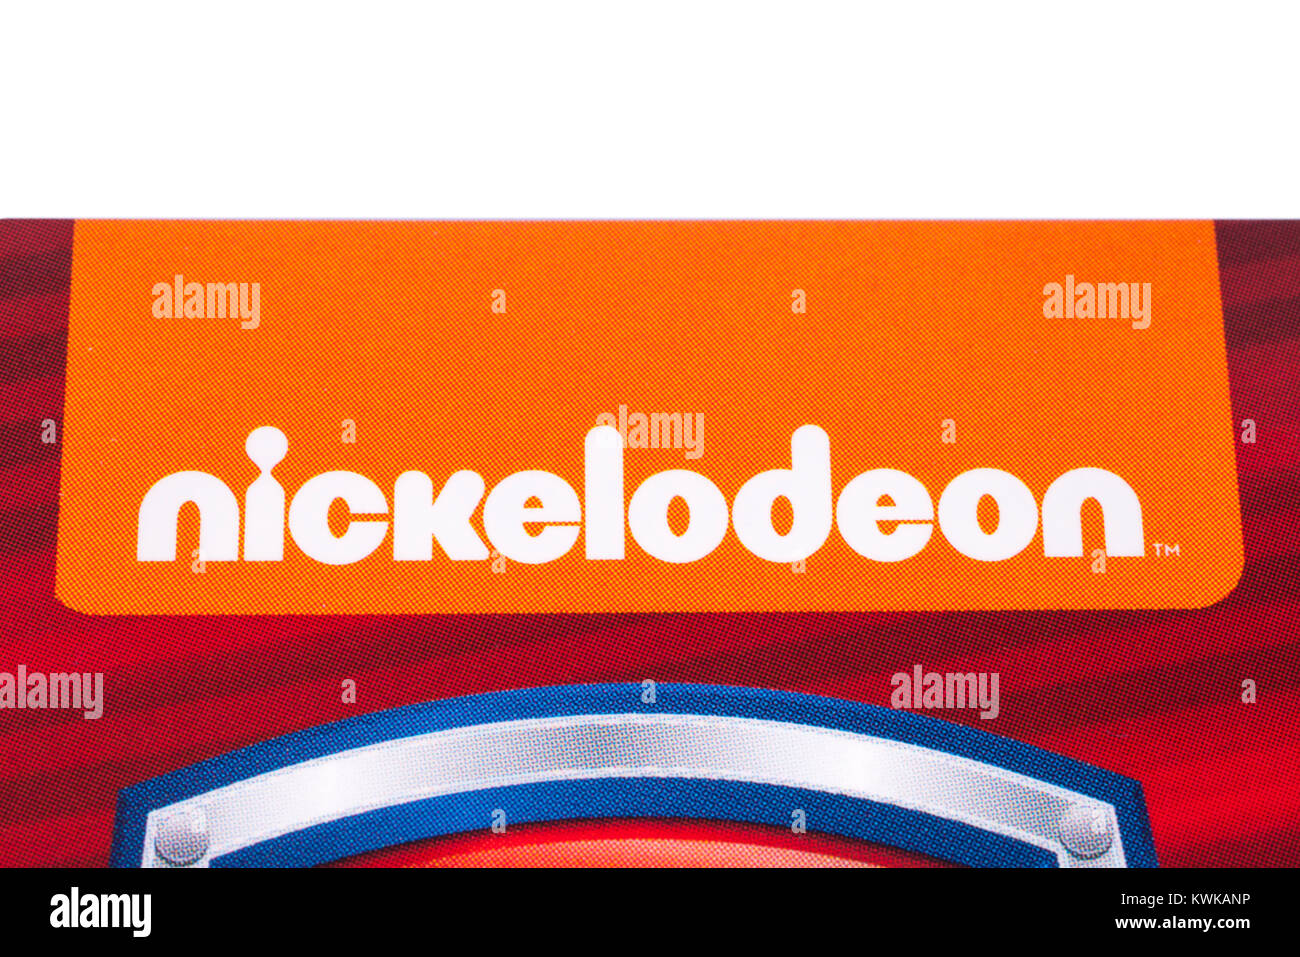 LONDON, UK - DECEMBER 18TH 2017: Close-up of the Nickelodeon logo ...